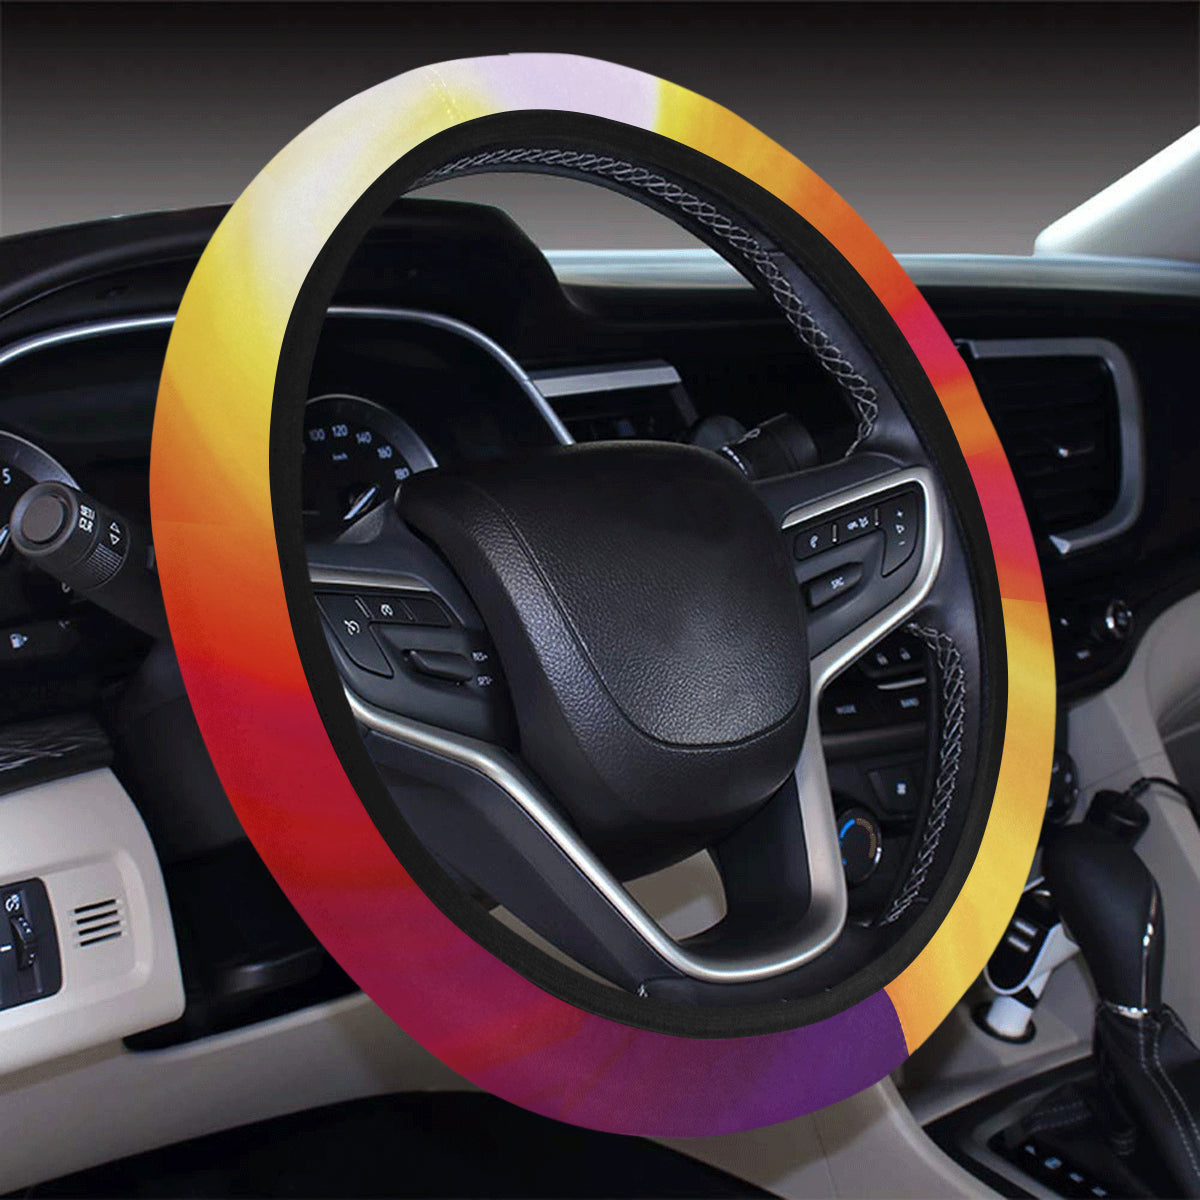 Vortex Twist Swirl Flame Themed Steering Wheel Cover with Elastic Edge